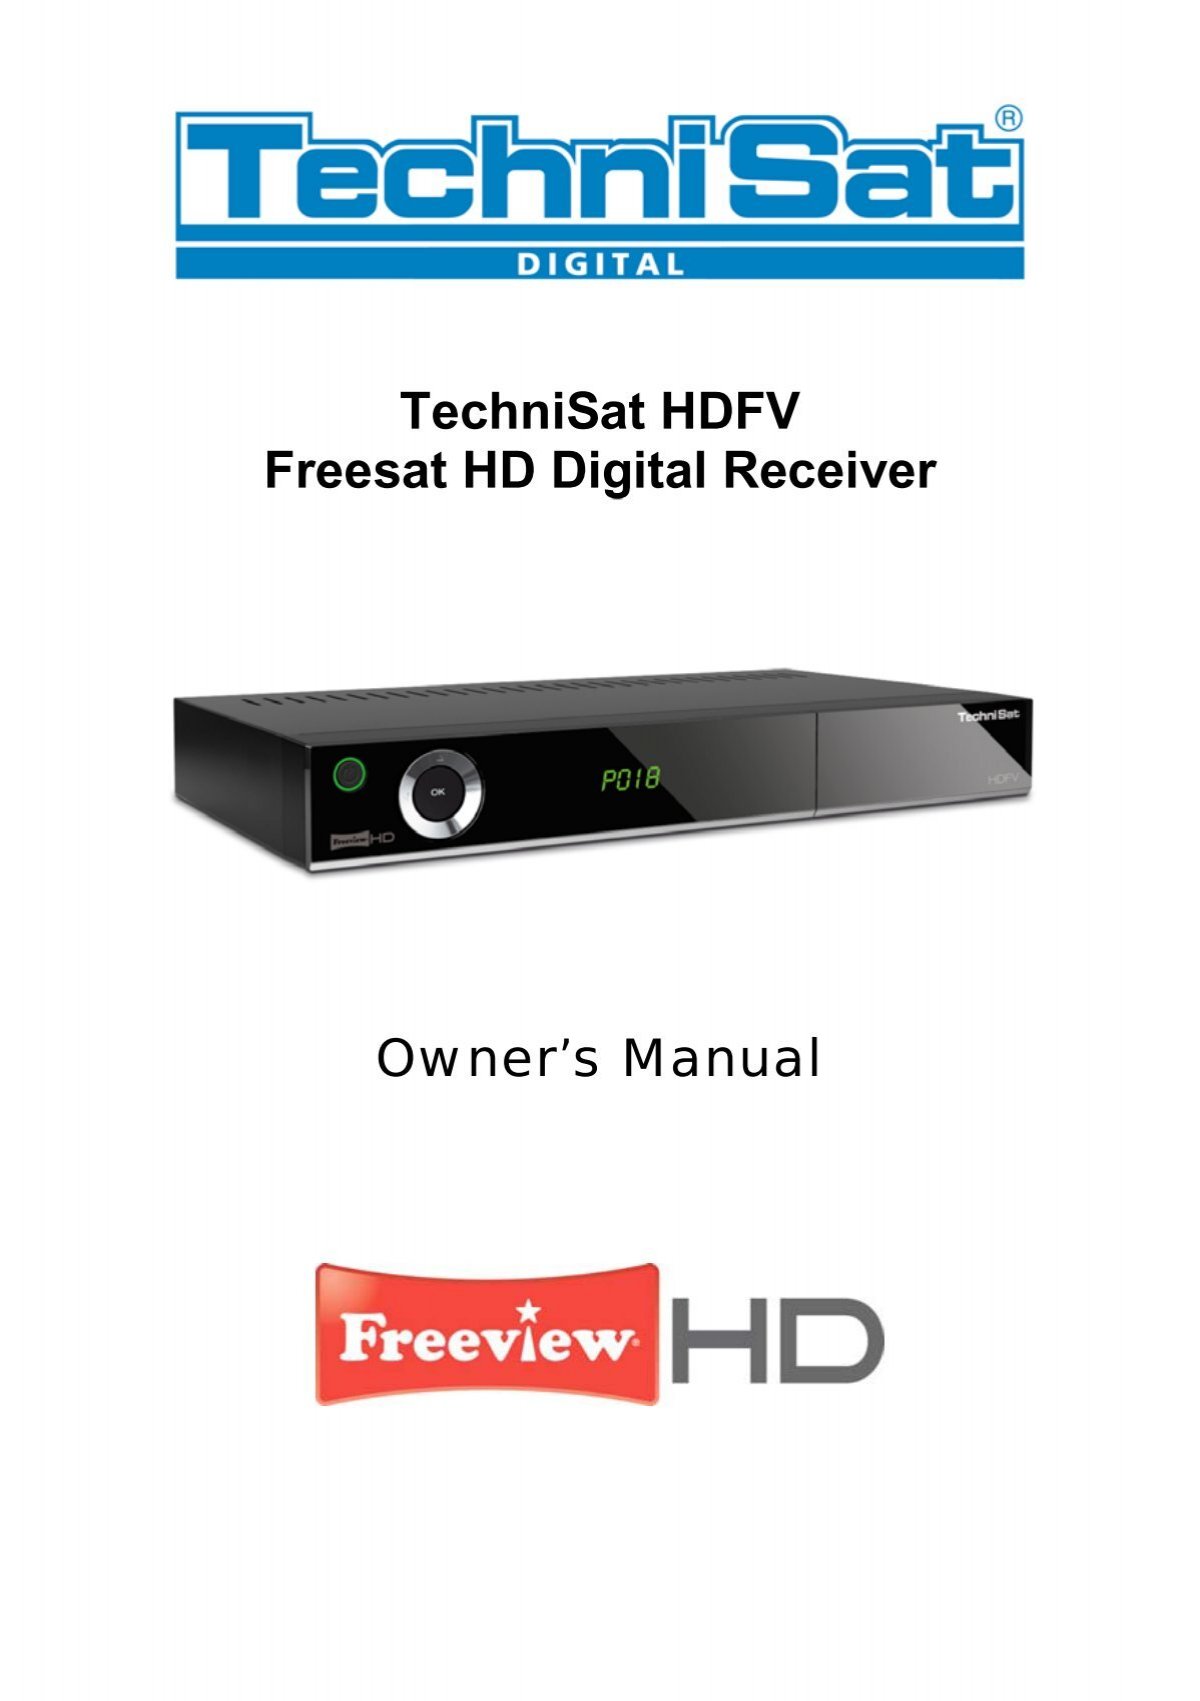 TechniSat: Digital television: receivers, TV, DVB-T, satellite